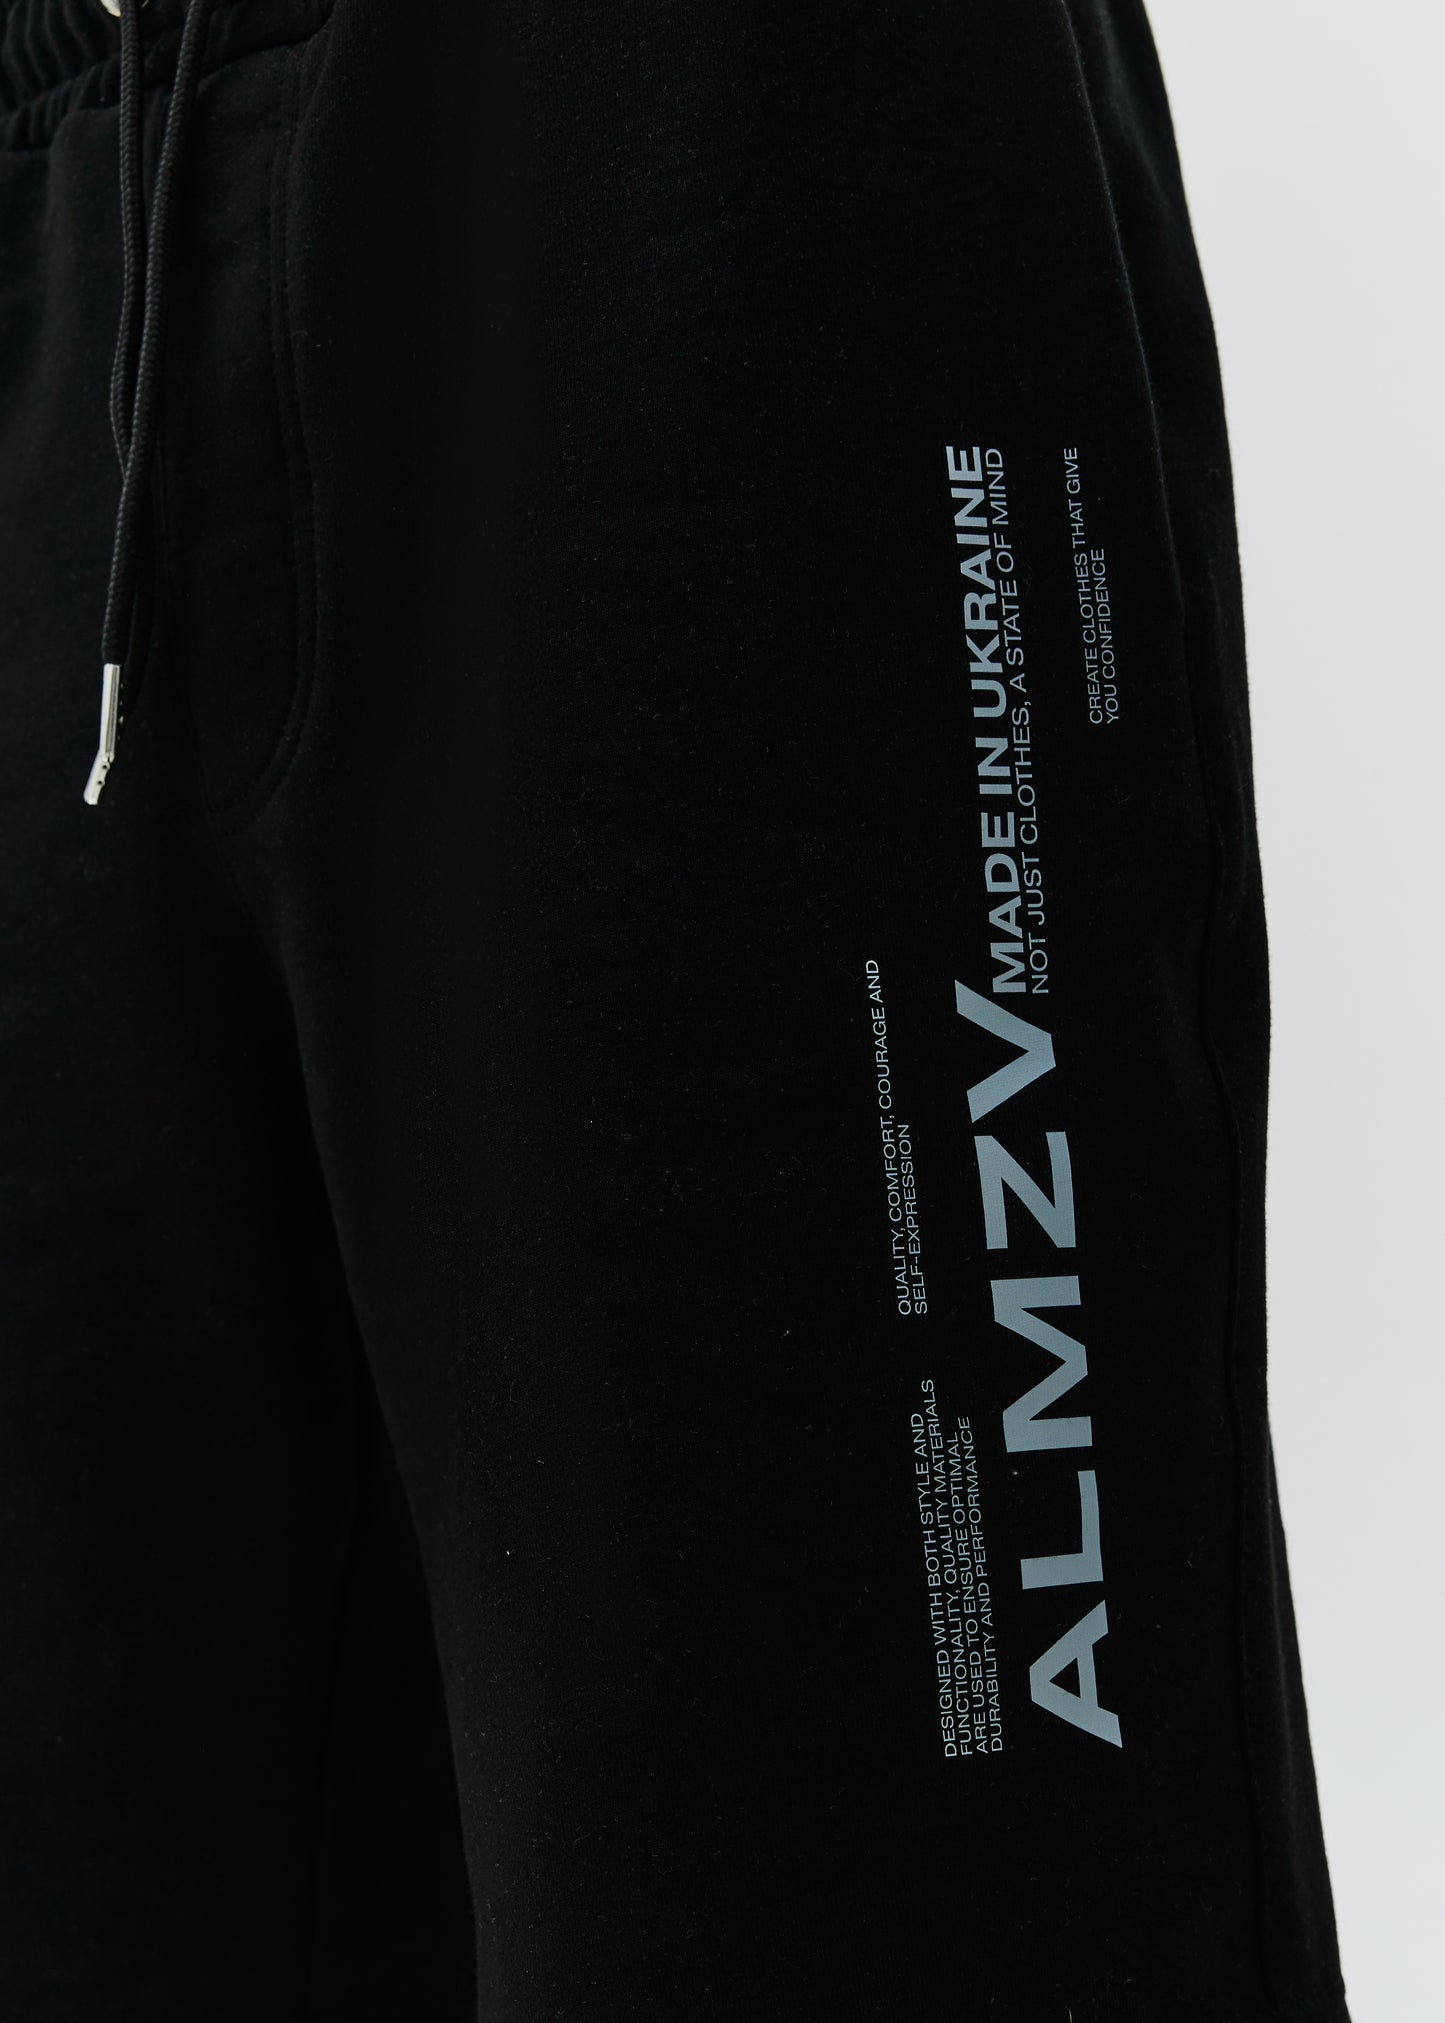 Shorts ALMZV Black